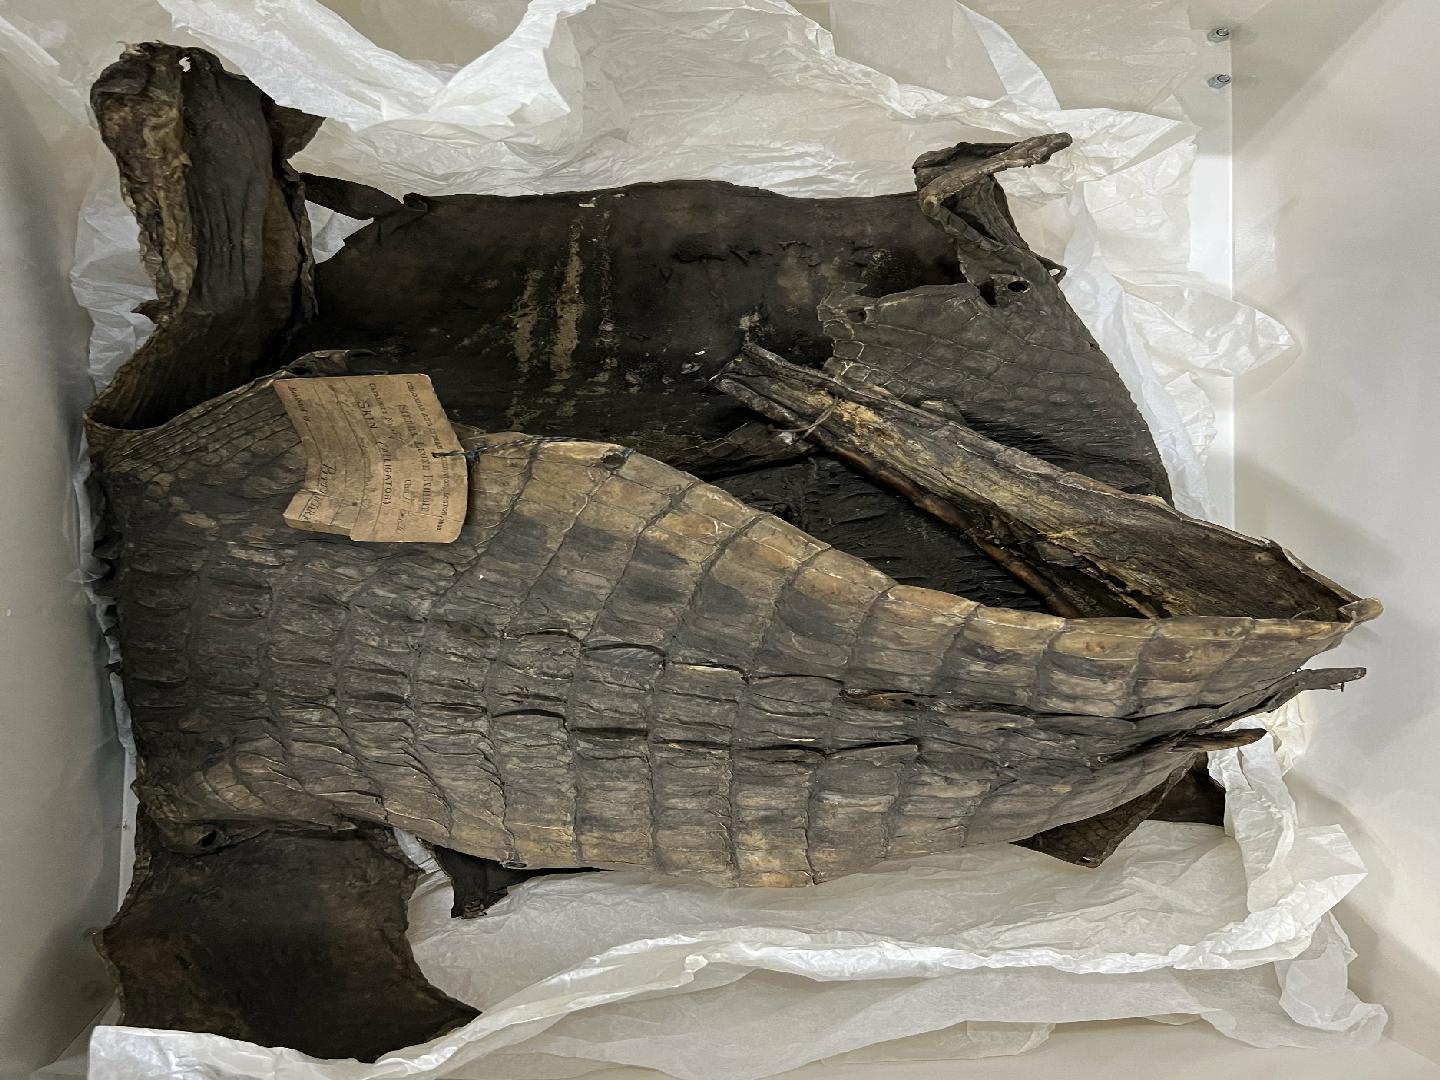 To NHMUK collection (Crocodylus niloticus Laurenti, 1768; NHMUK:ecatalogue:10260594)